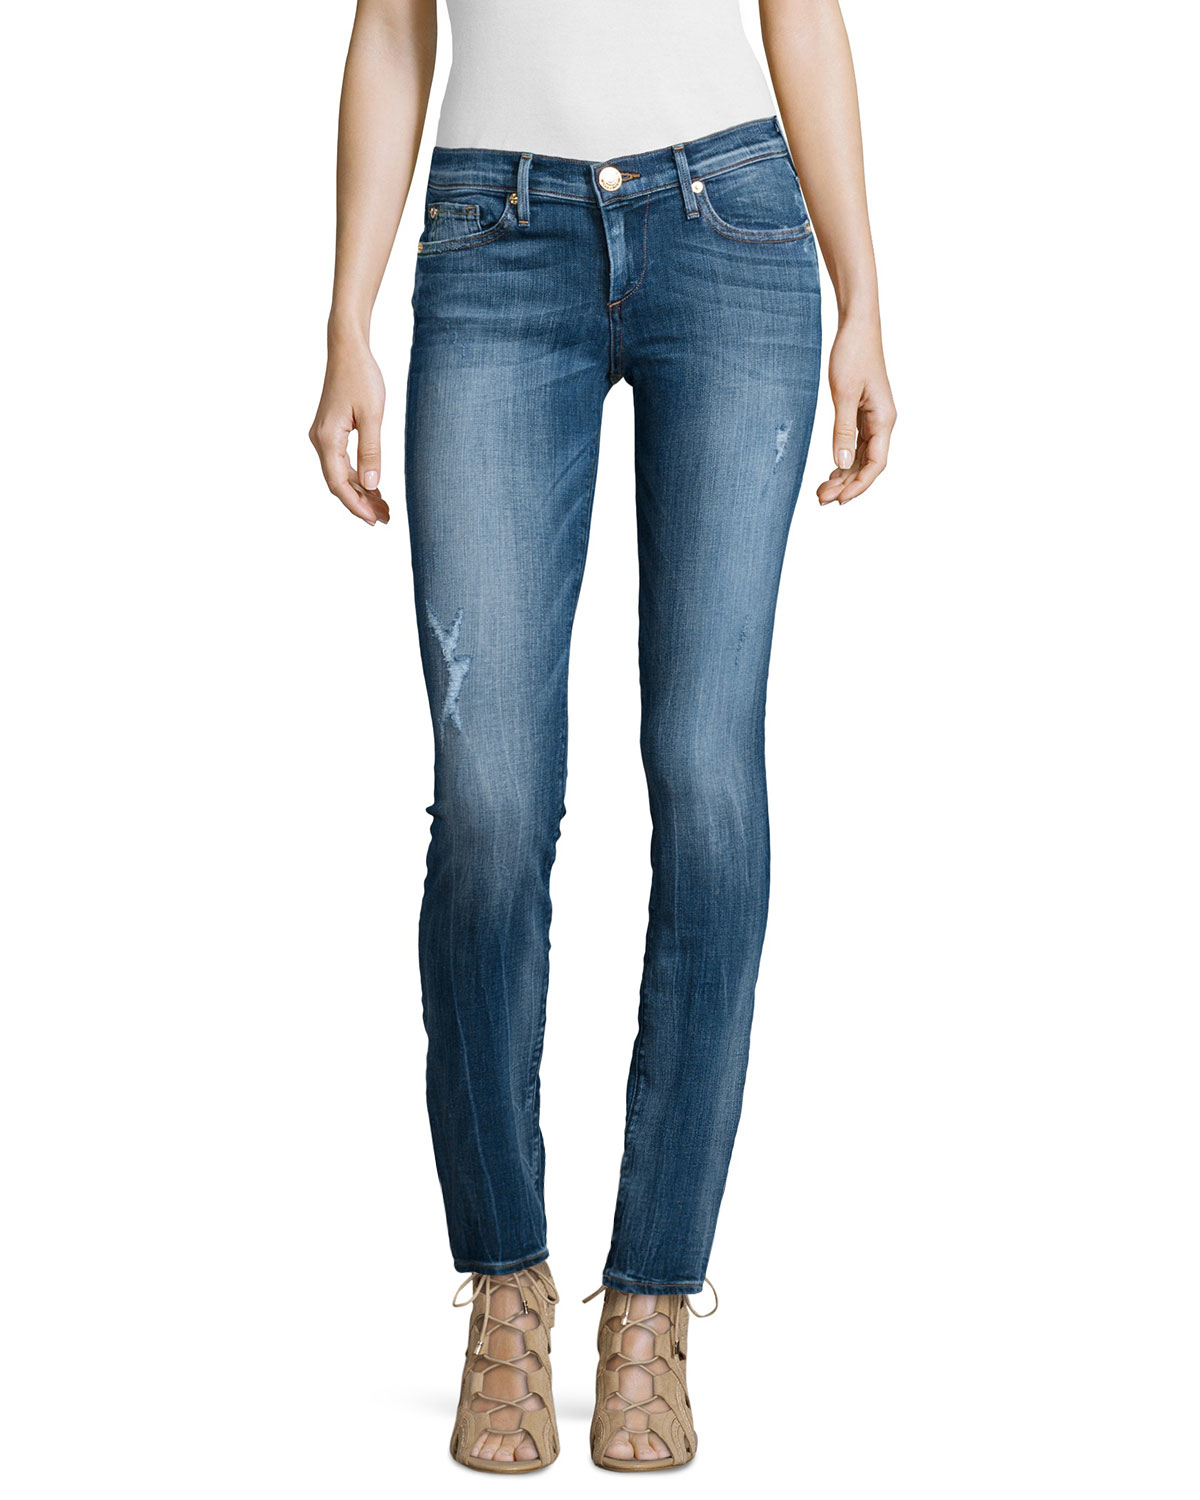 Lyst - True Religion Casey Low-rise Super Skinny Jeans in Blue